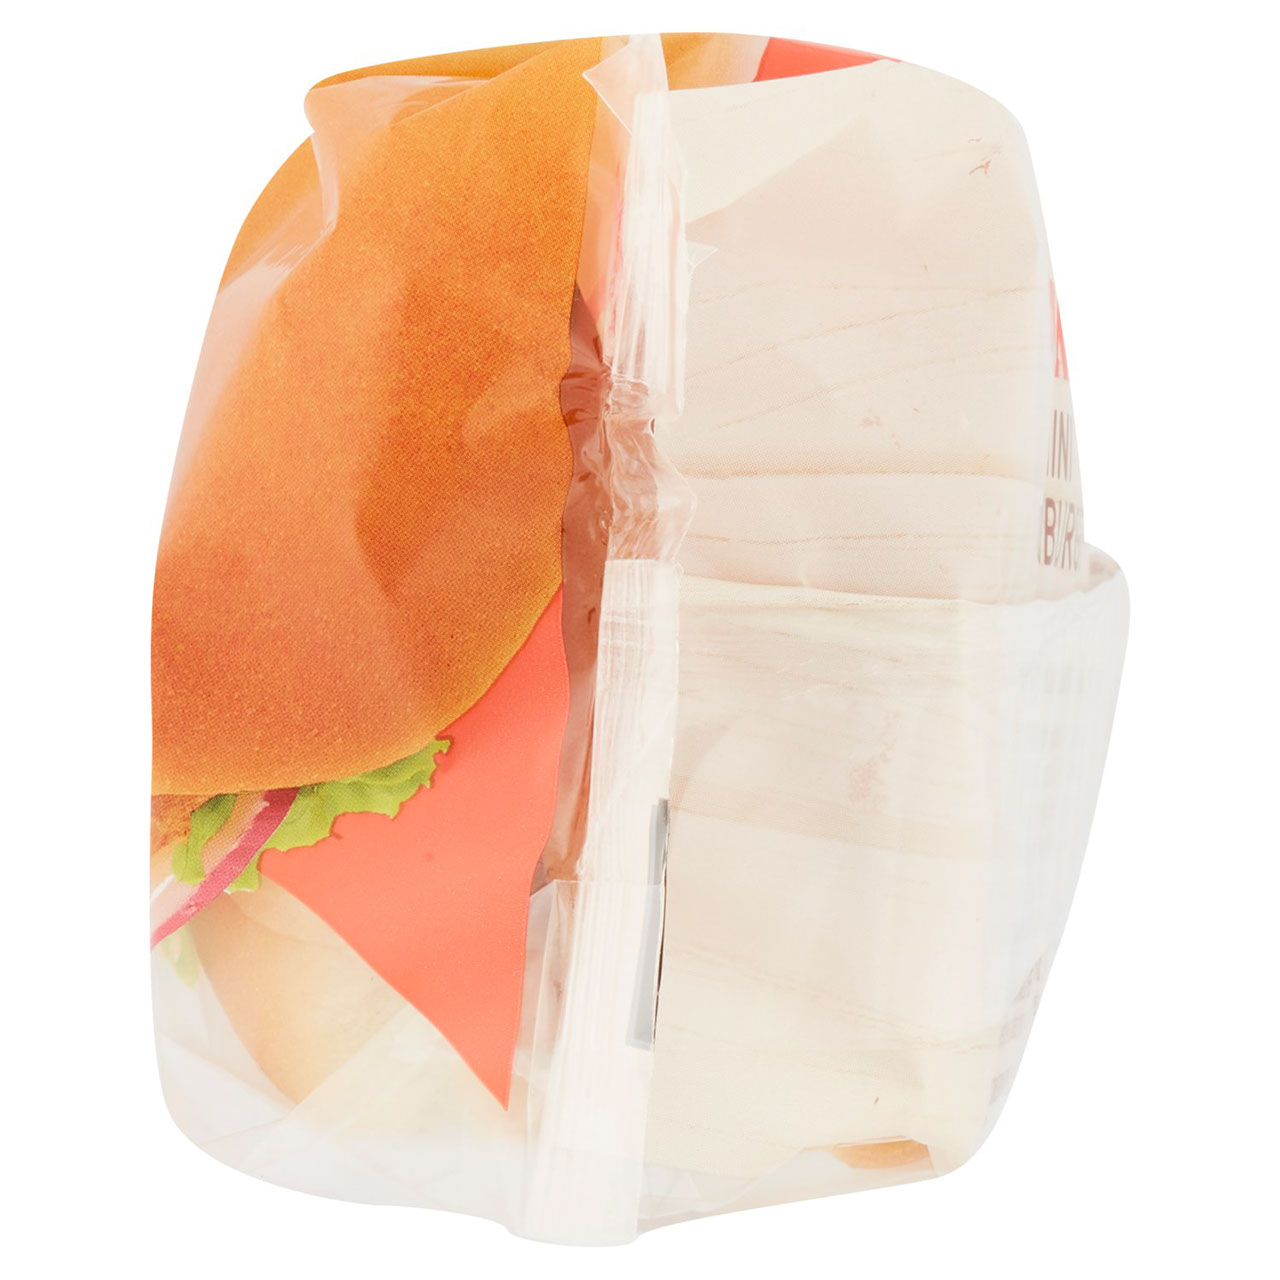 Panini per Hamburger Conad in vendita online